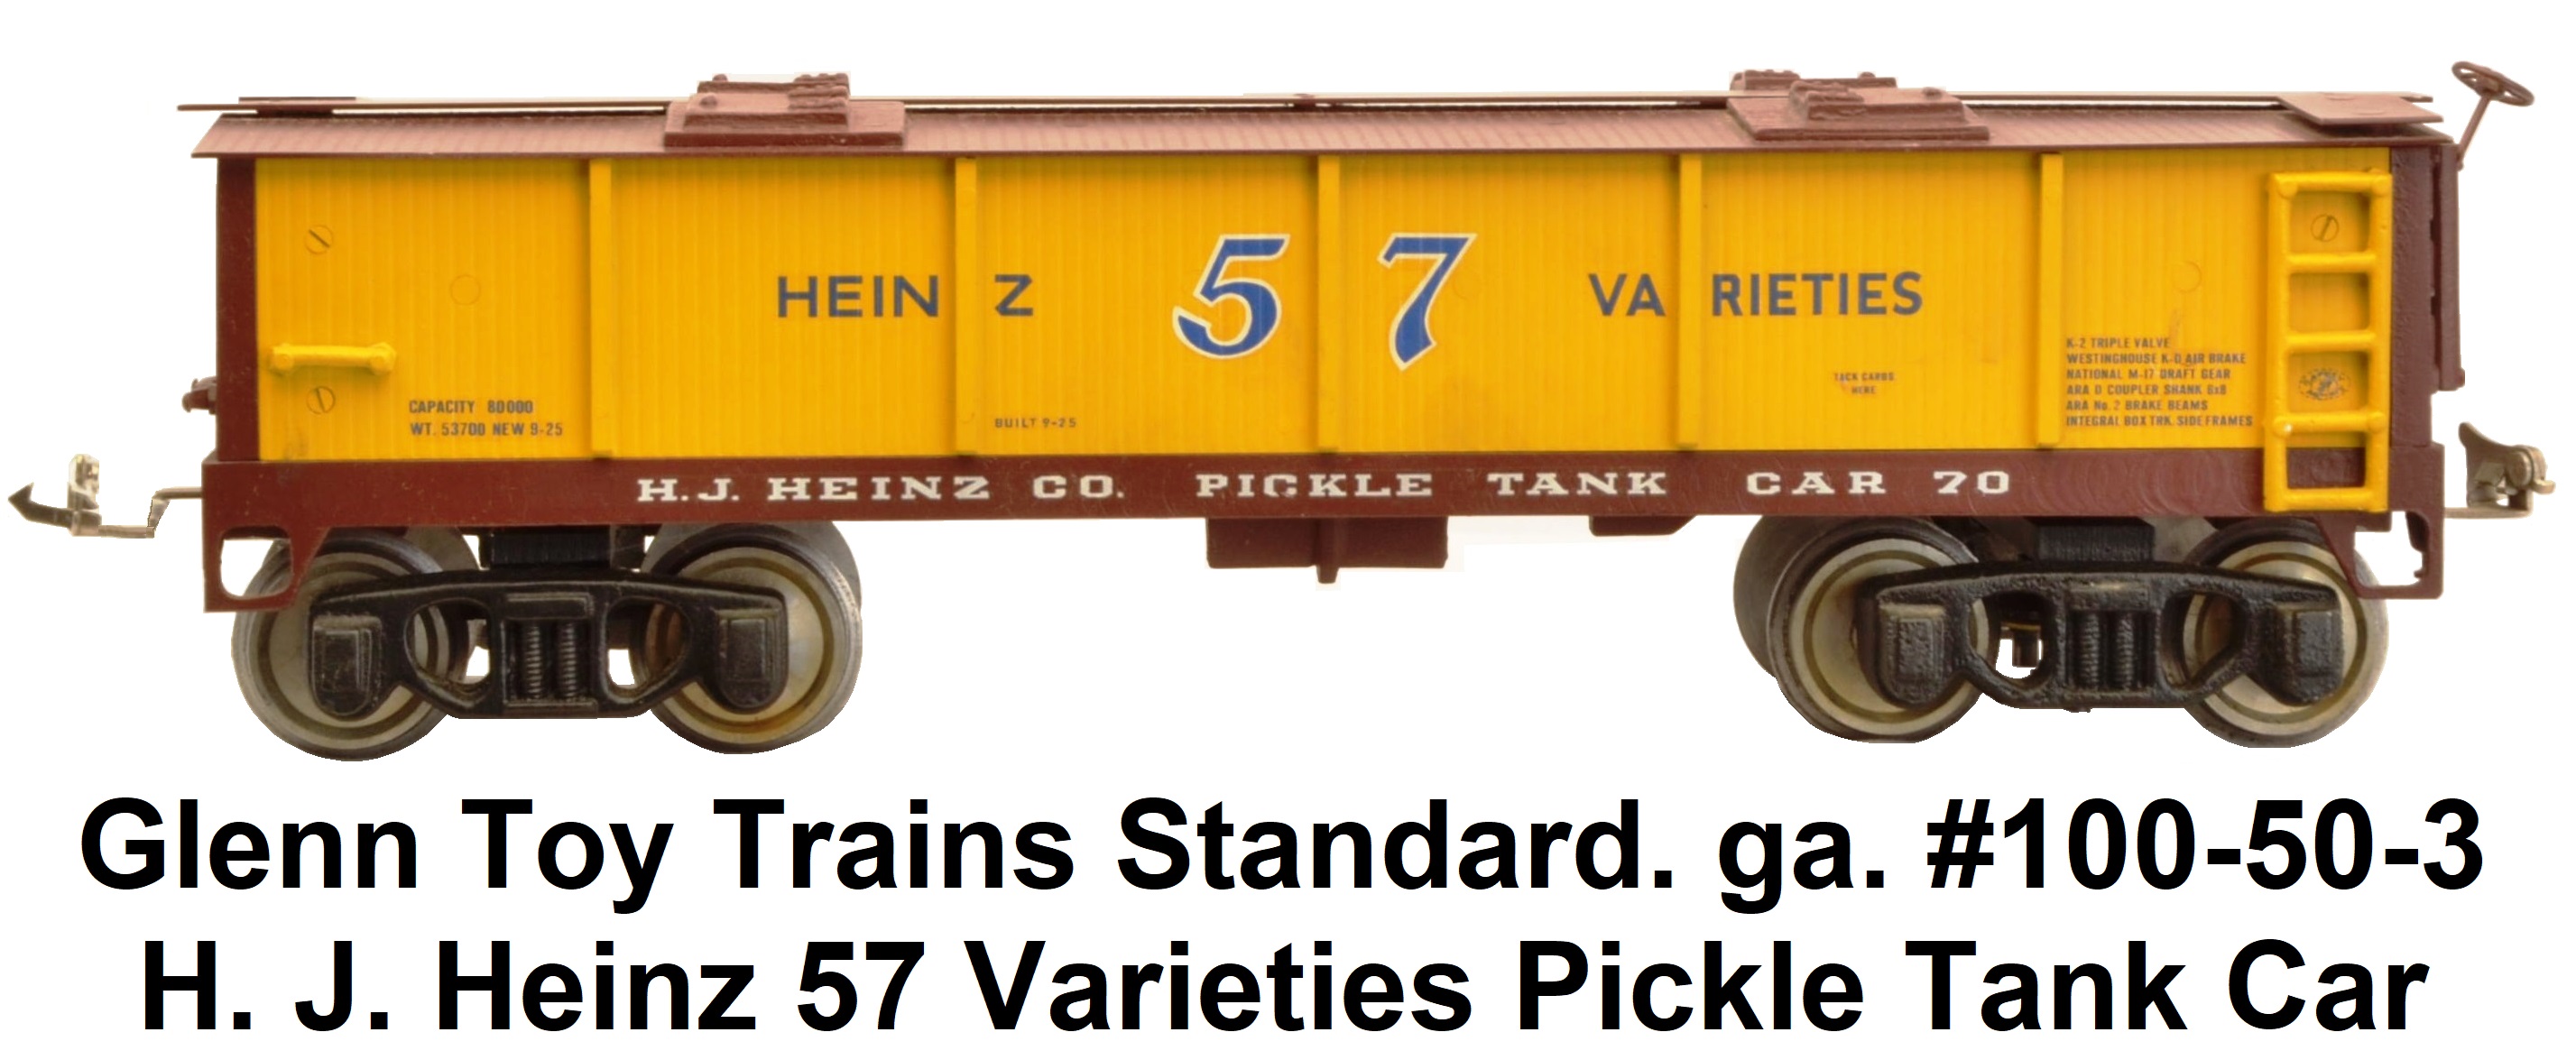 Glenn Toy Trains Glenn Gerhard Standard gauge #100-50-3 H. J. Heinz 57 Varieties Pickle Tank Car